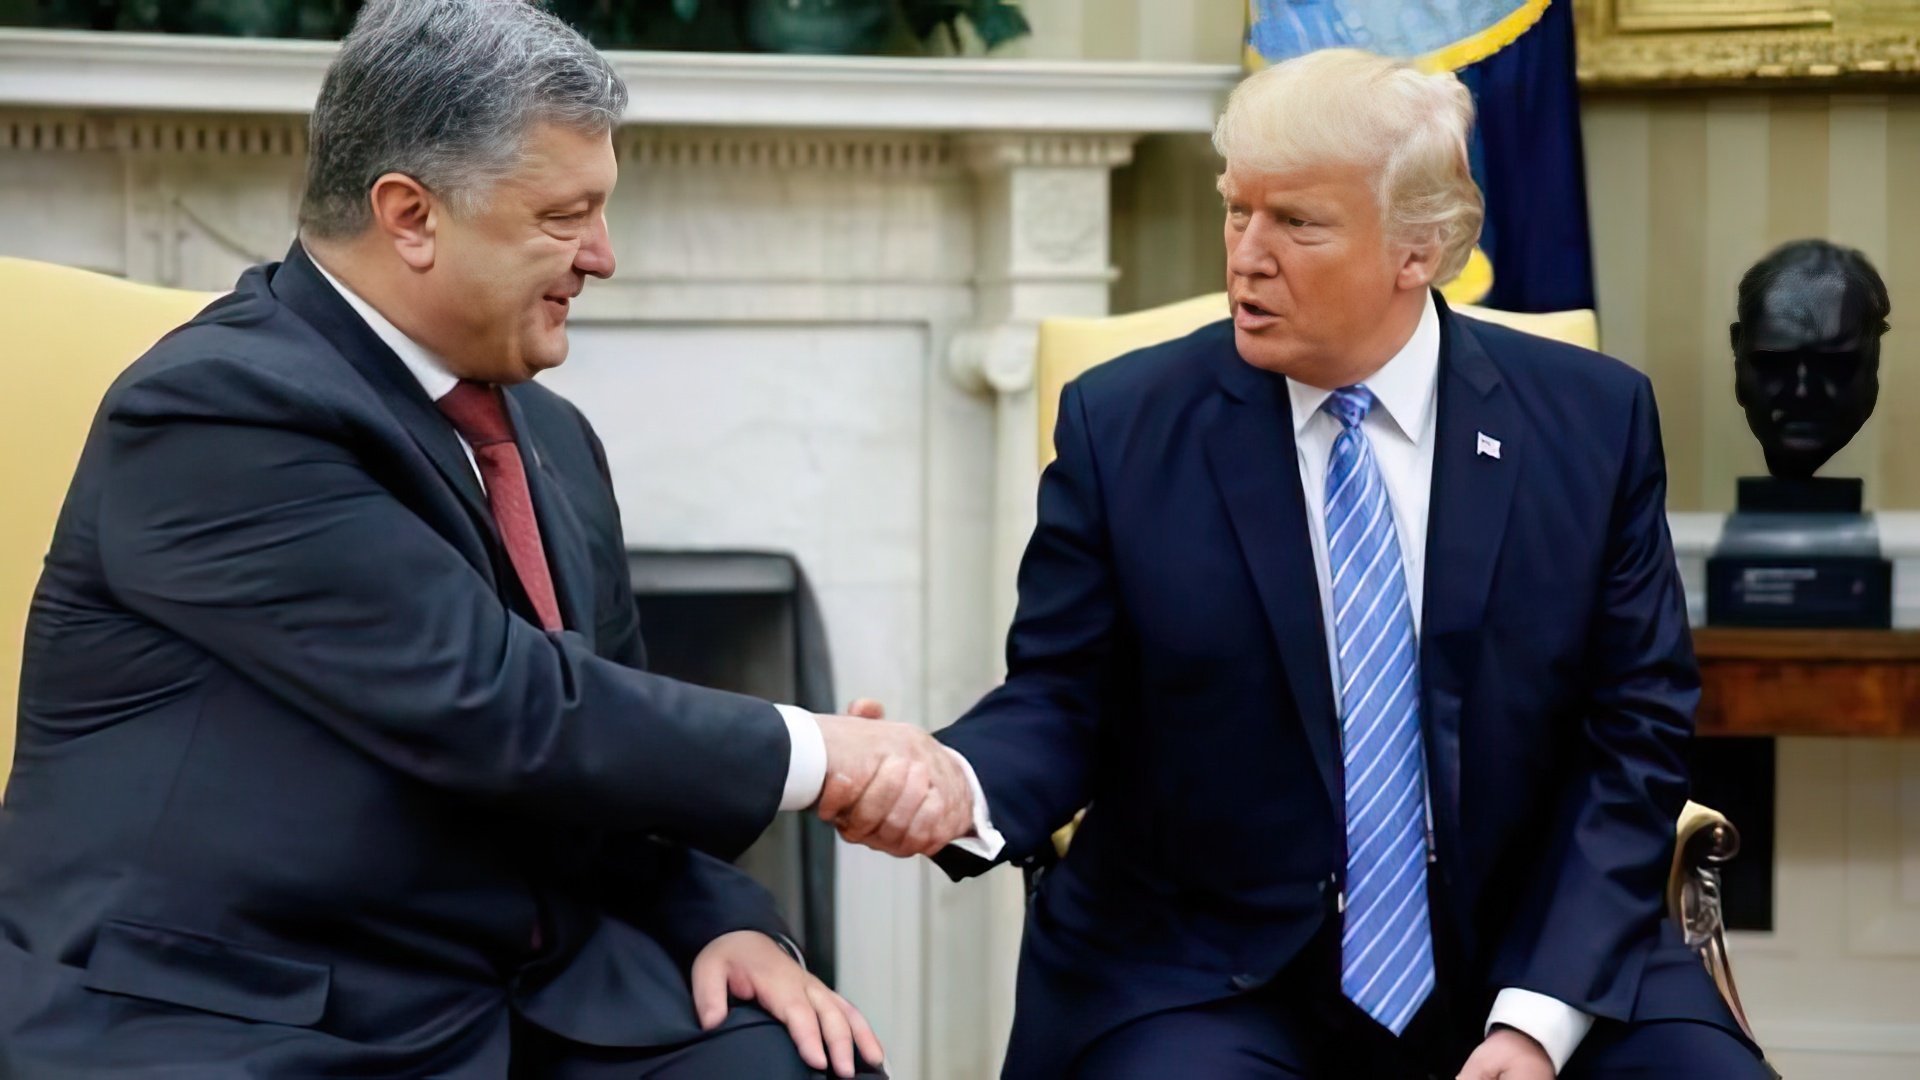 The first meeting between Trump and Poroshenko